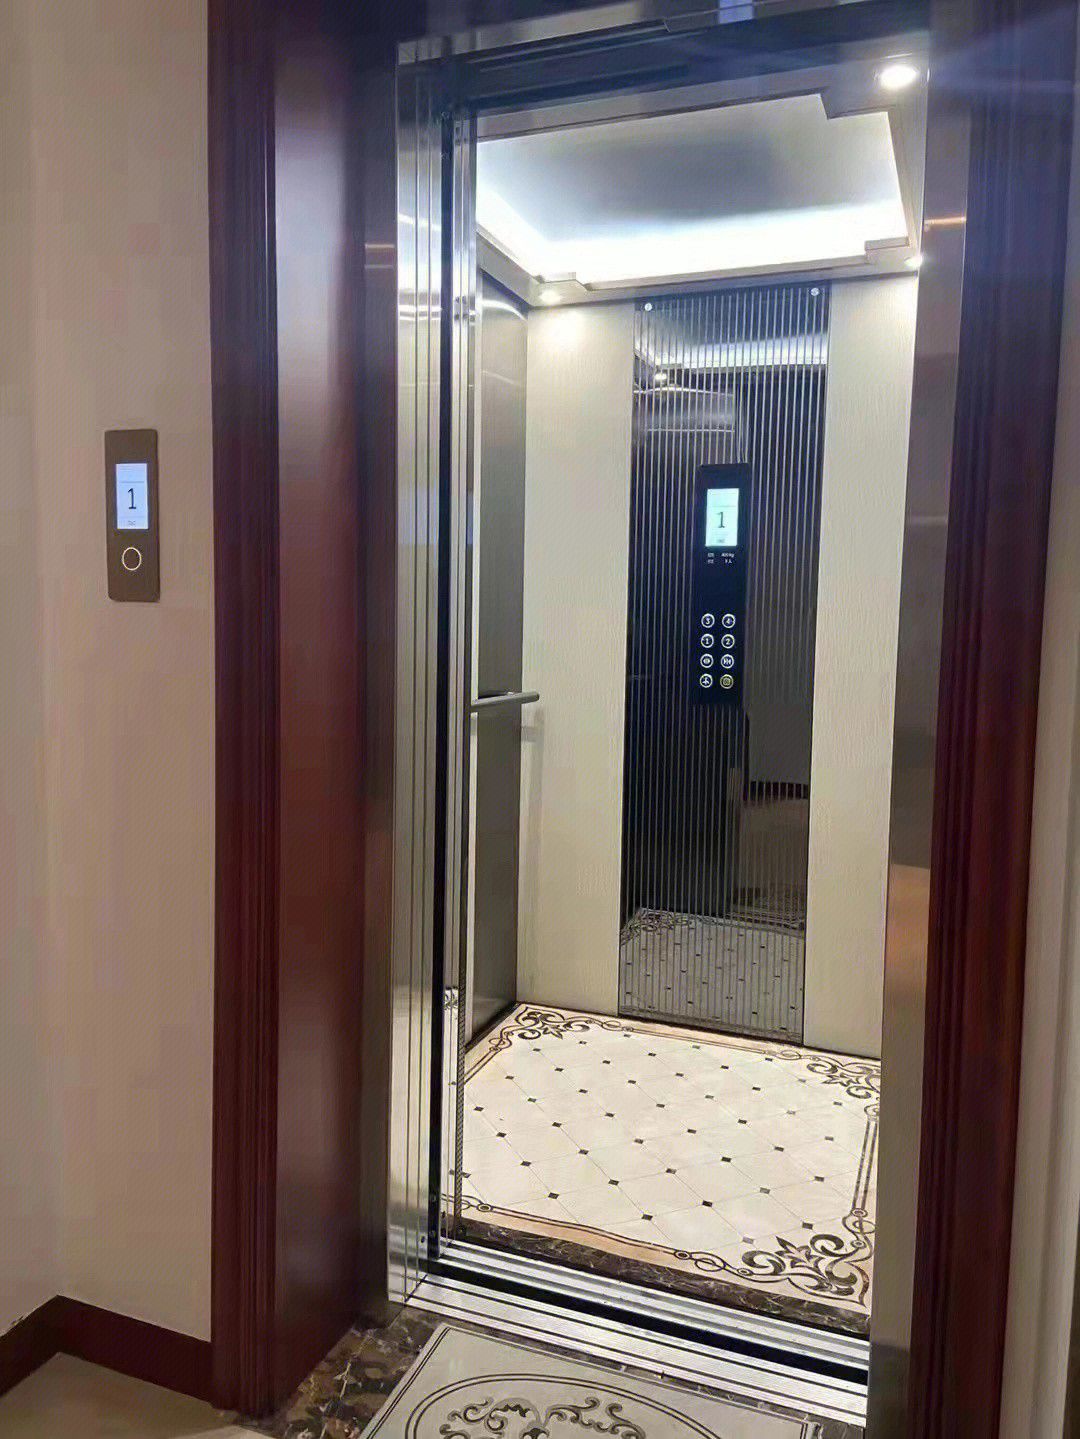 PabiannisCommercial elevators, small elevatorsMaterial selection